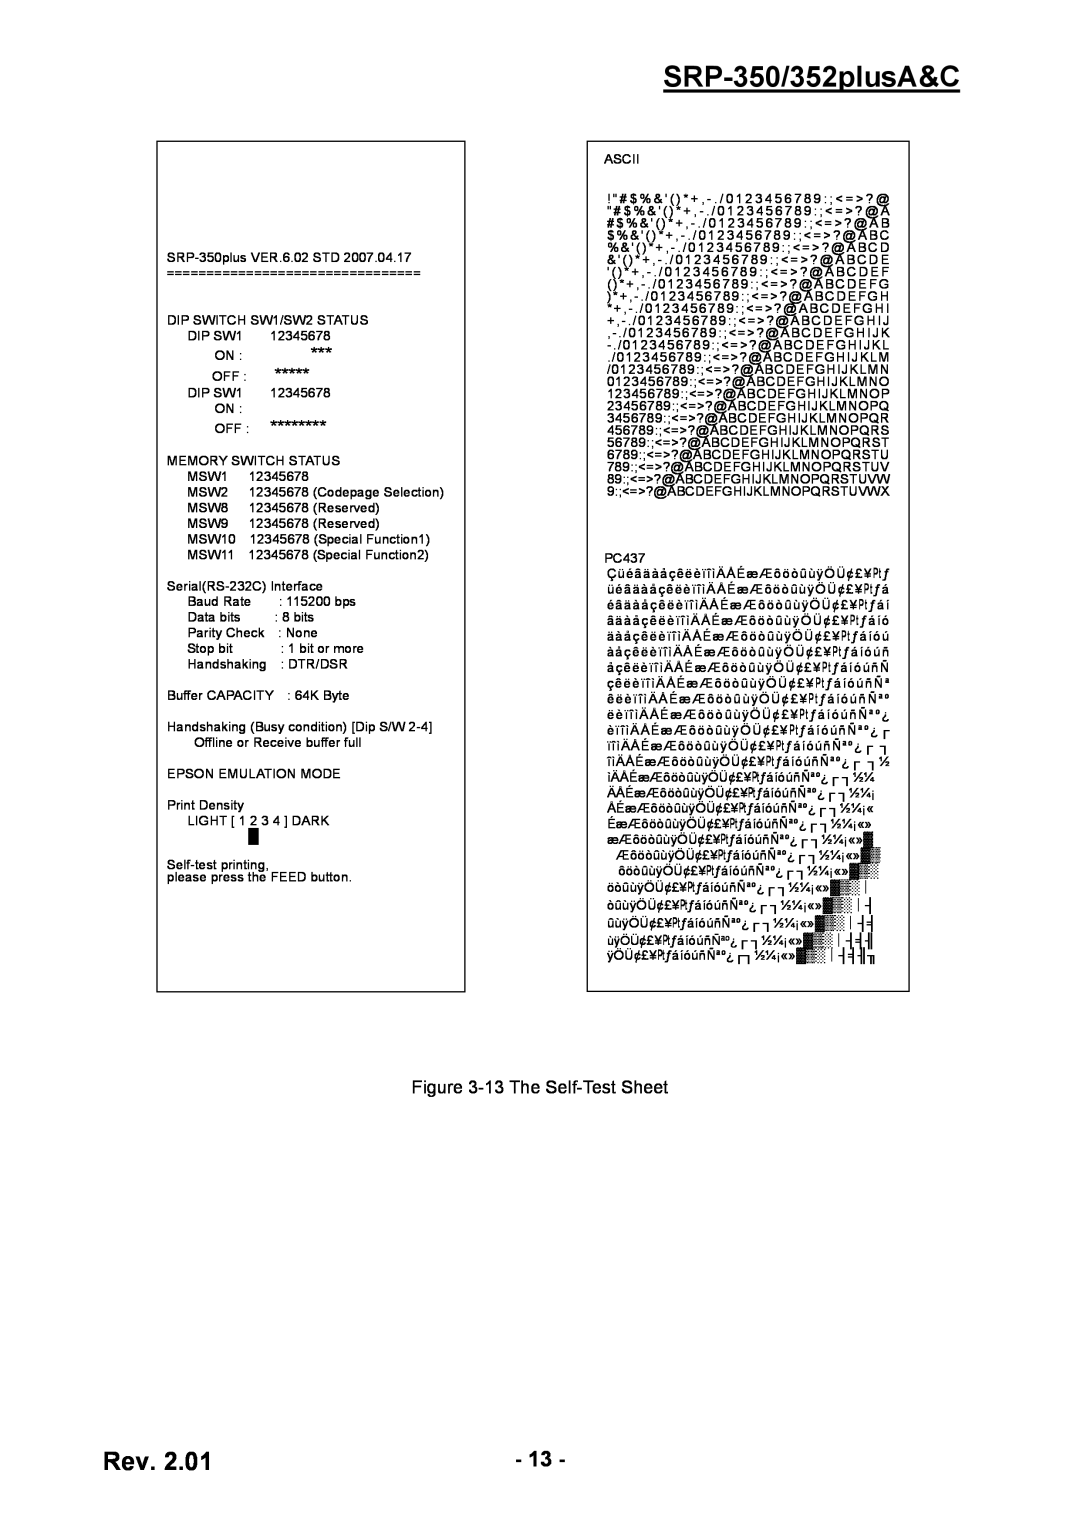 BIXOLON service manual SRP-350/352plusA&C, 13 The Self-Test Sheet 